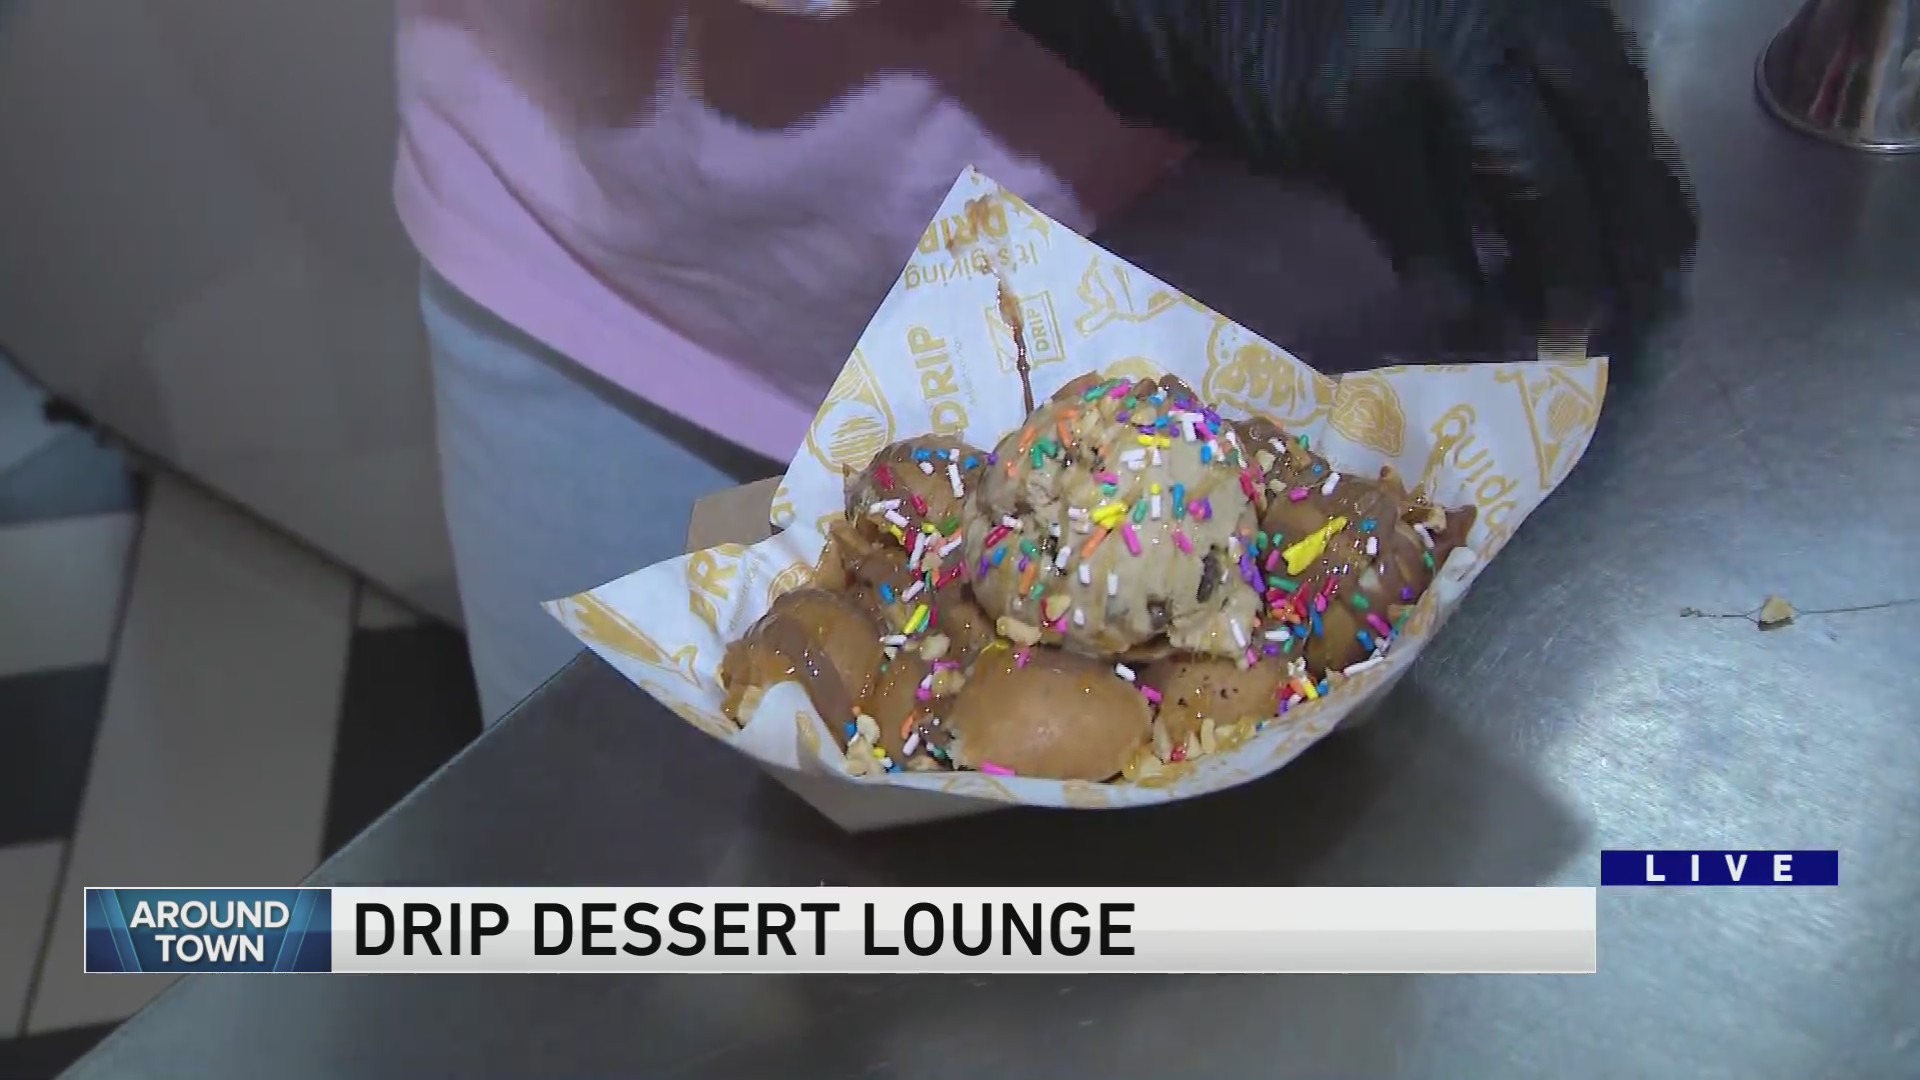 Around Town checks out Drip Dessert Lounge